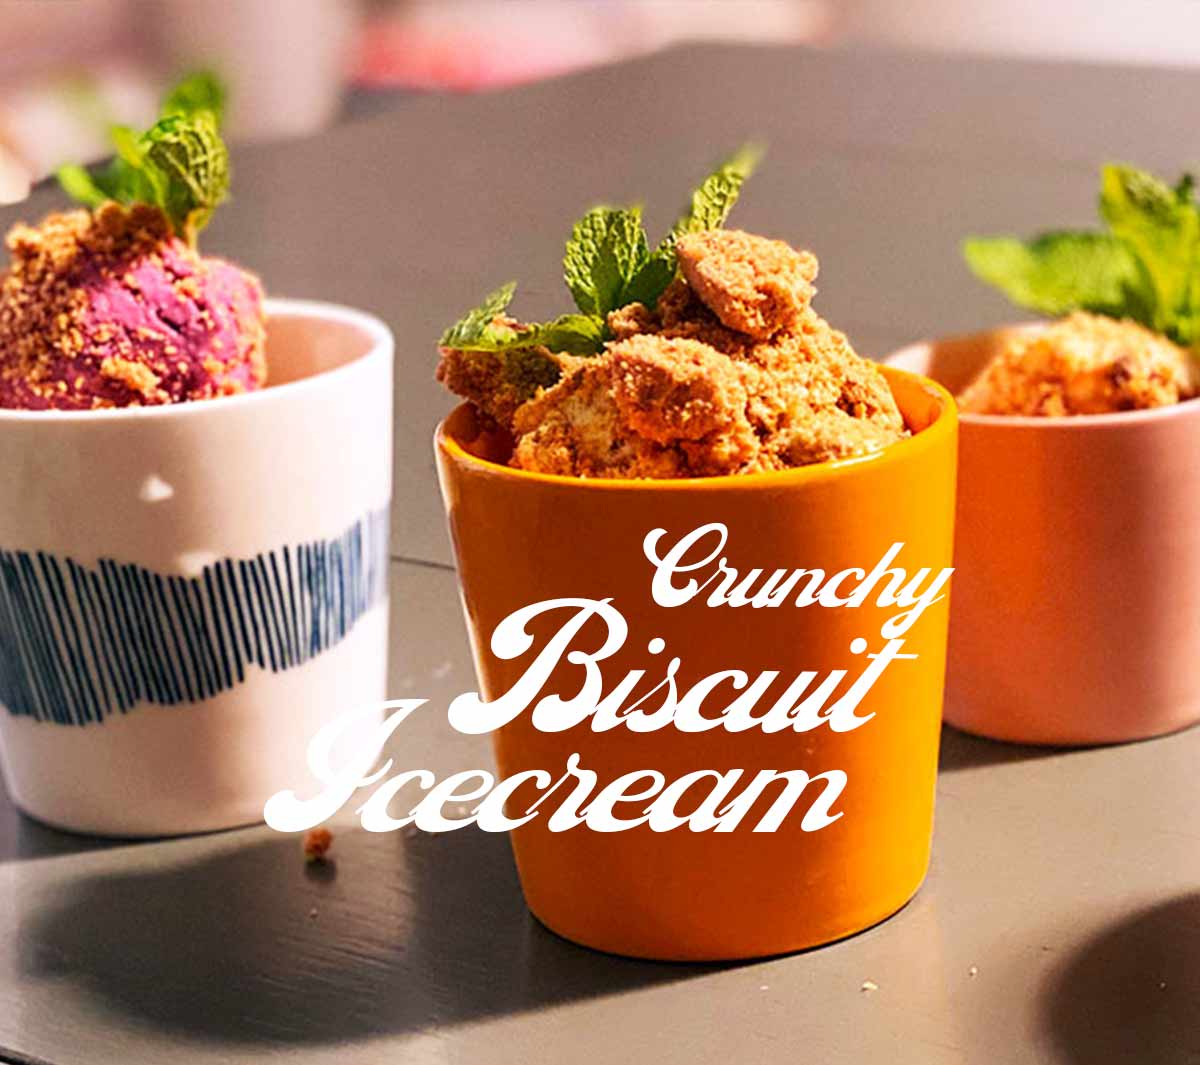 Crunchy Biscuit Ice-cream